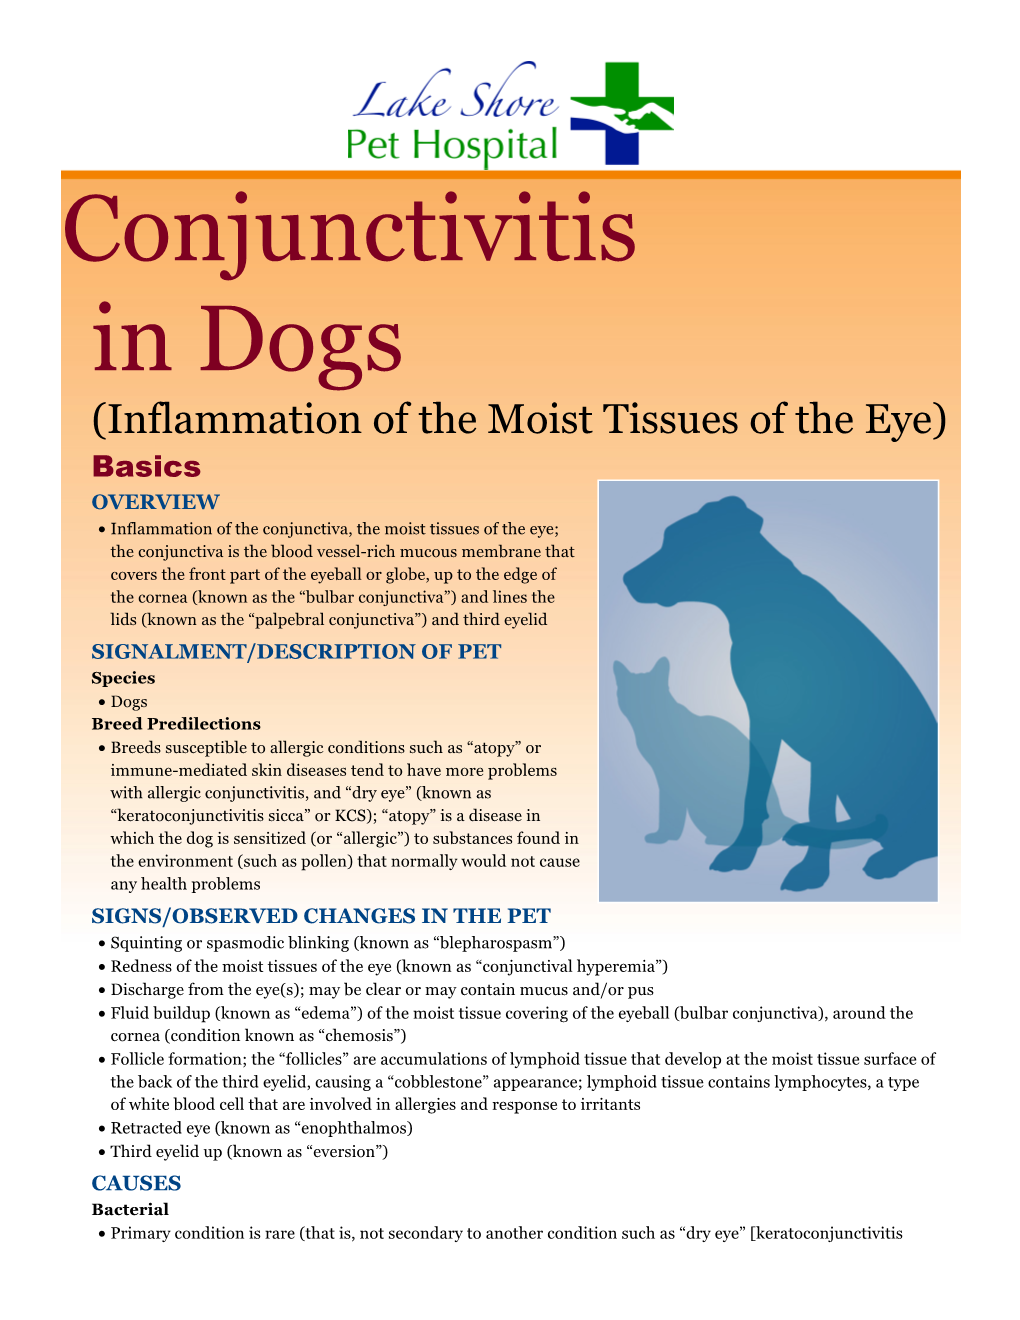 Conjunctivitis in Dogs